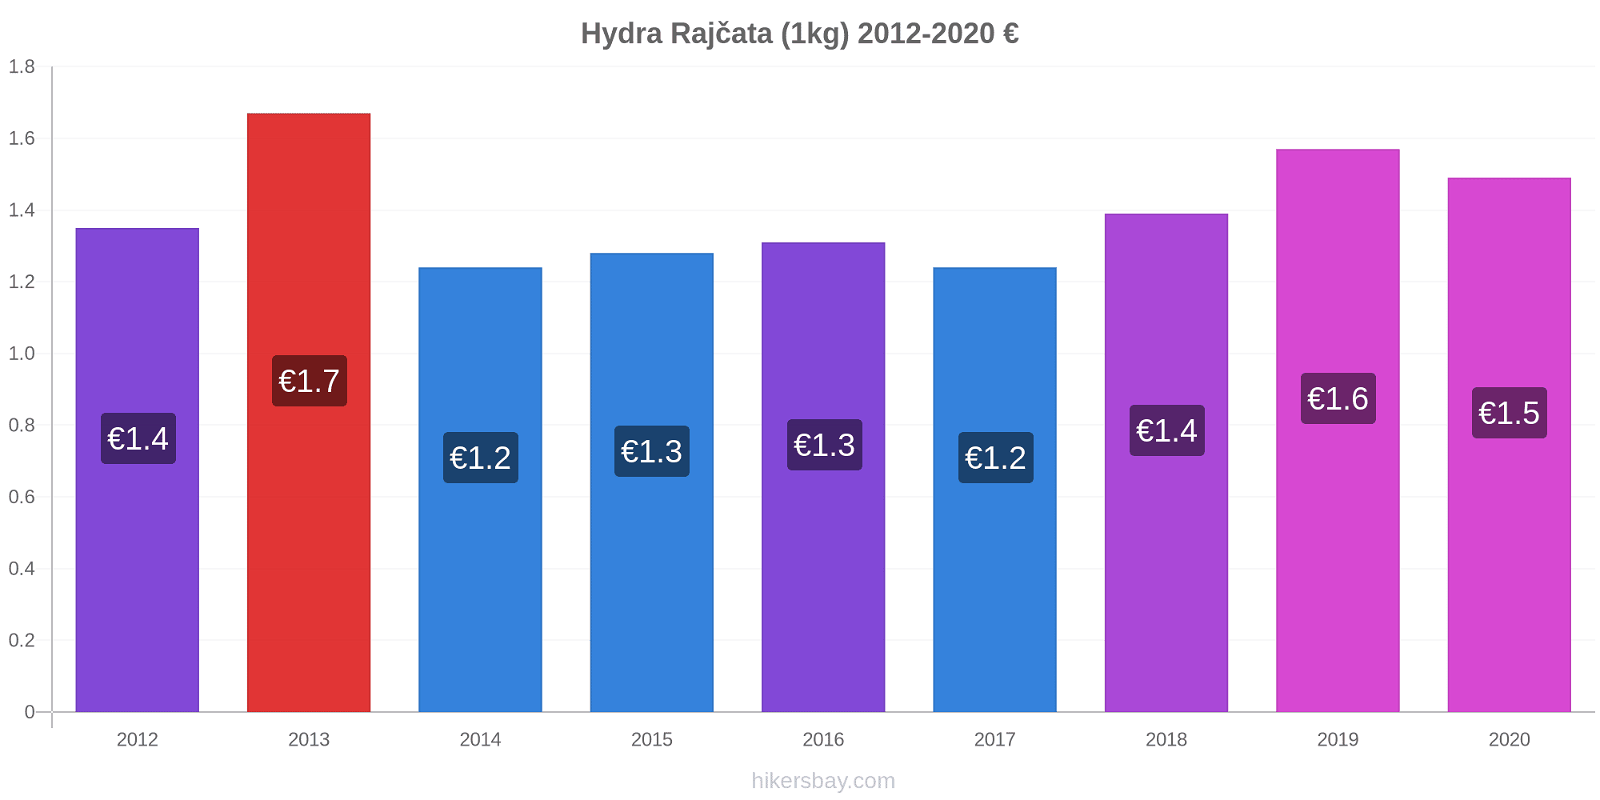 Hydra změny cen Rajčata (1kg) hikersbay.com